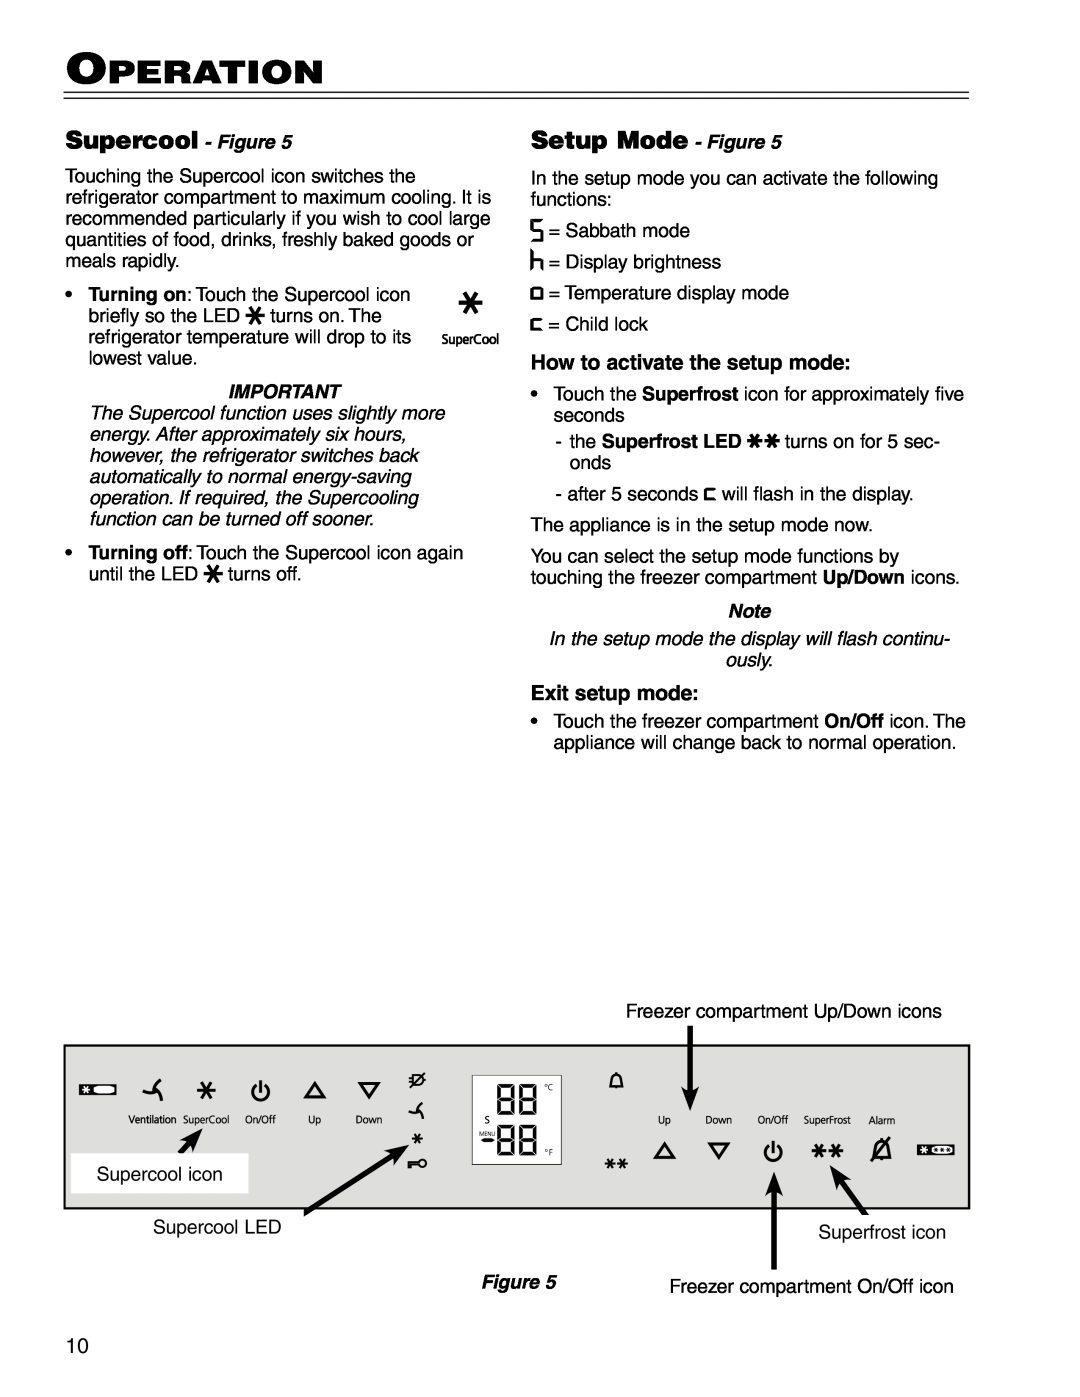 Liebherr CS 1611 7801 149-00 Supercool - Figure, Setup Mode - Figure, How to activate the setup mode, Exit setup mode 